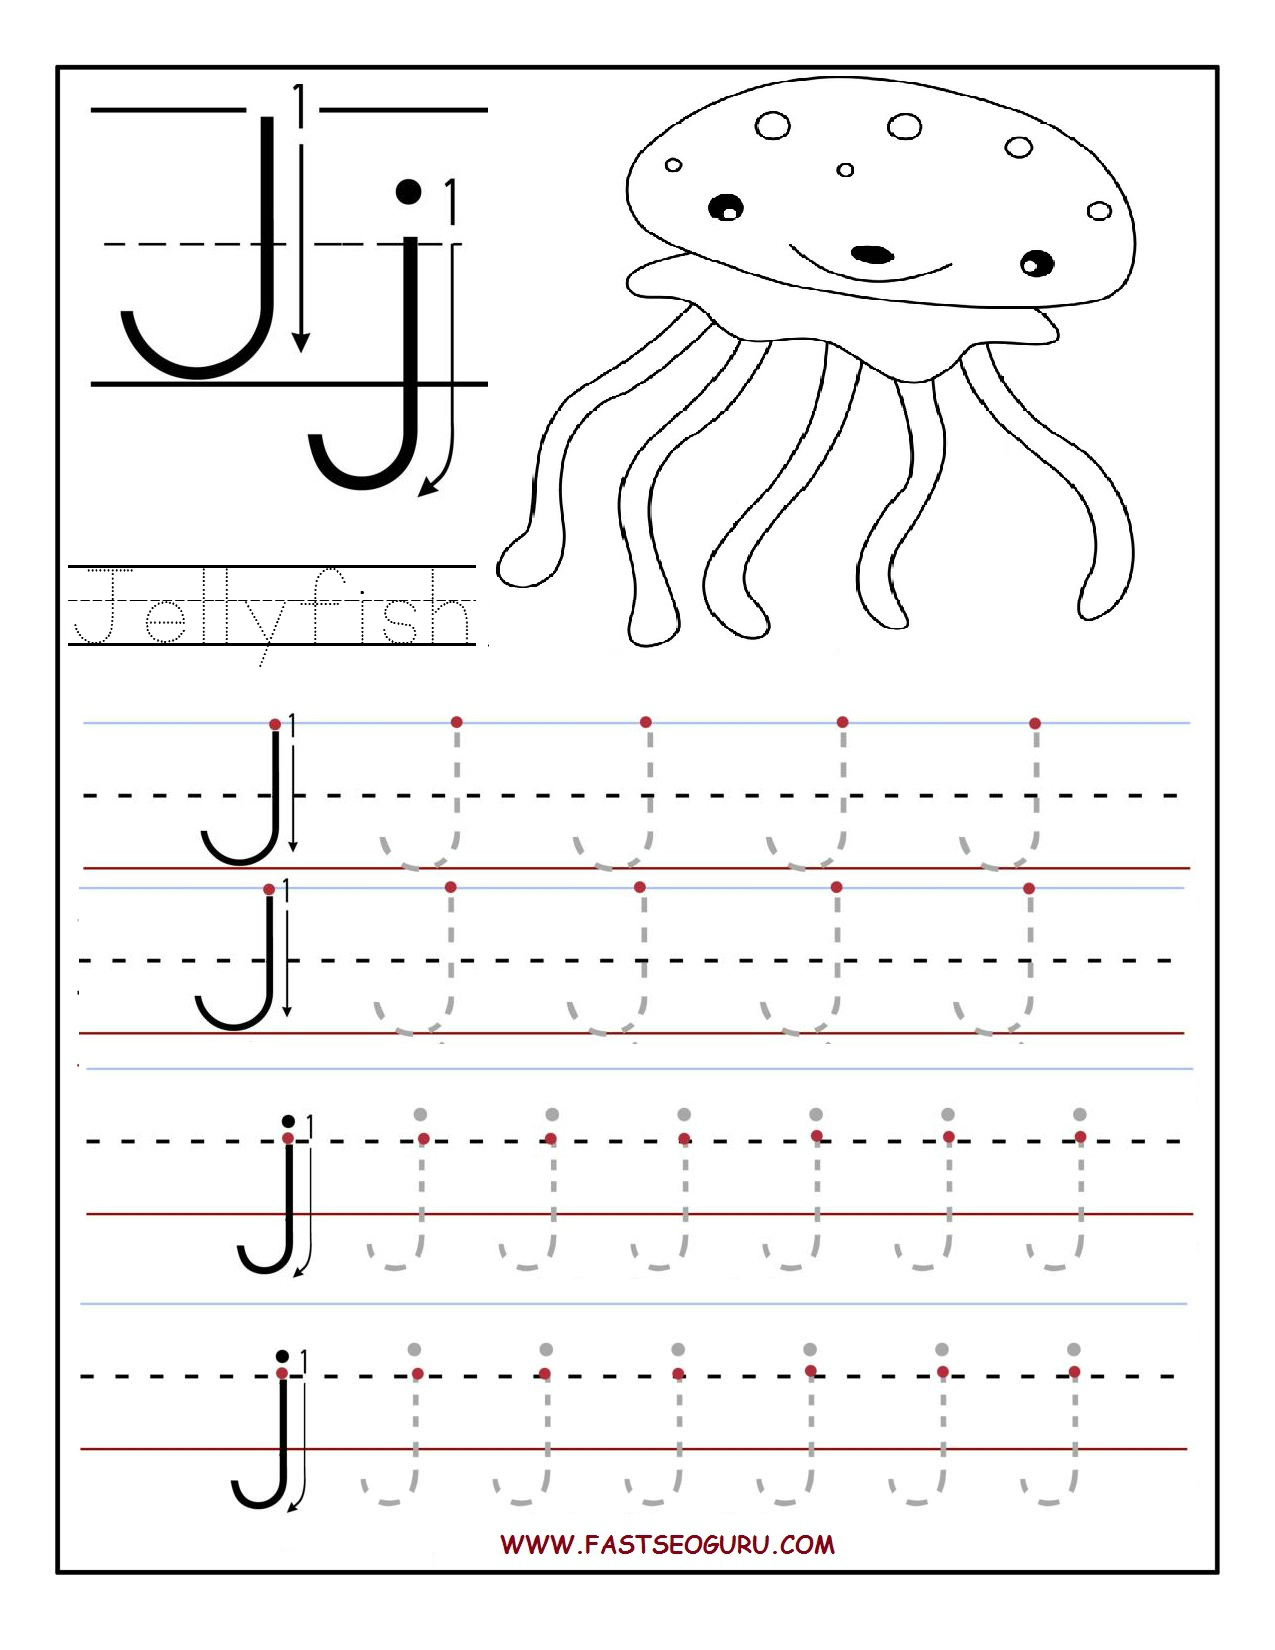 Printable letter J tracing worksheets for preschool